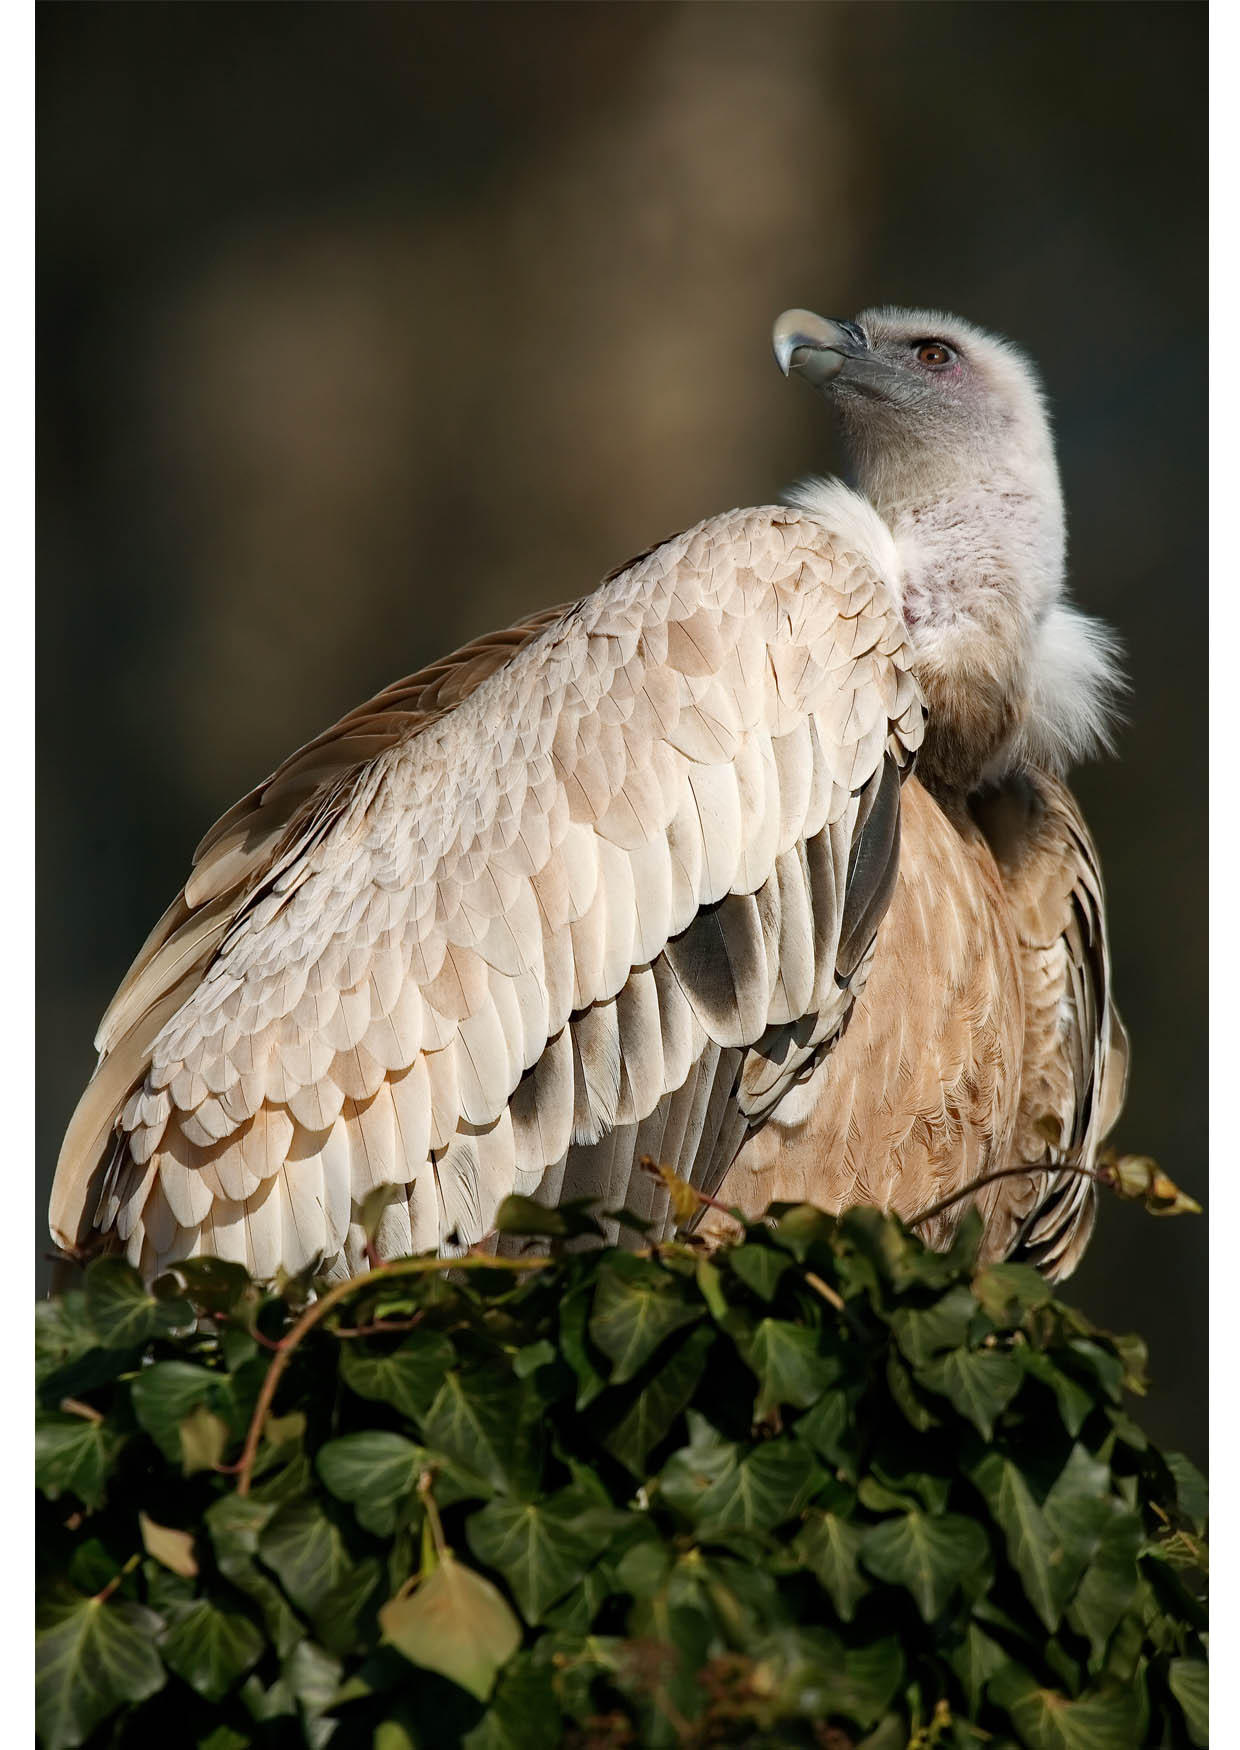 Photo vulture